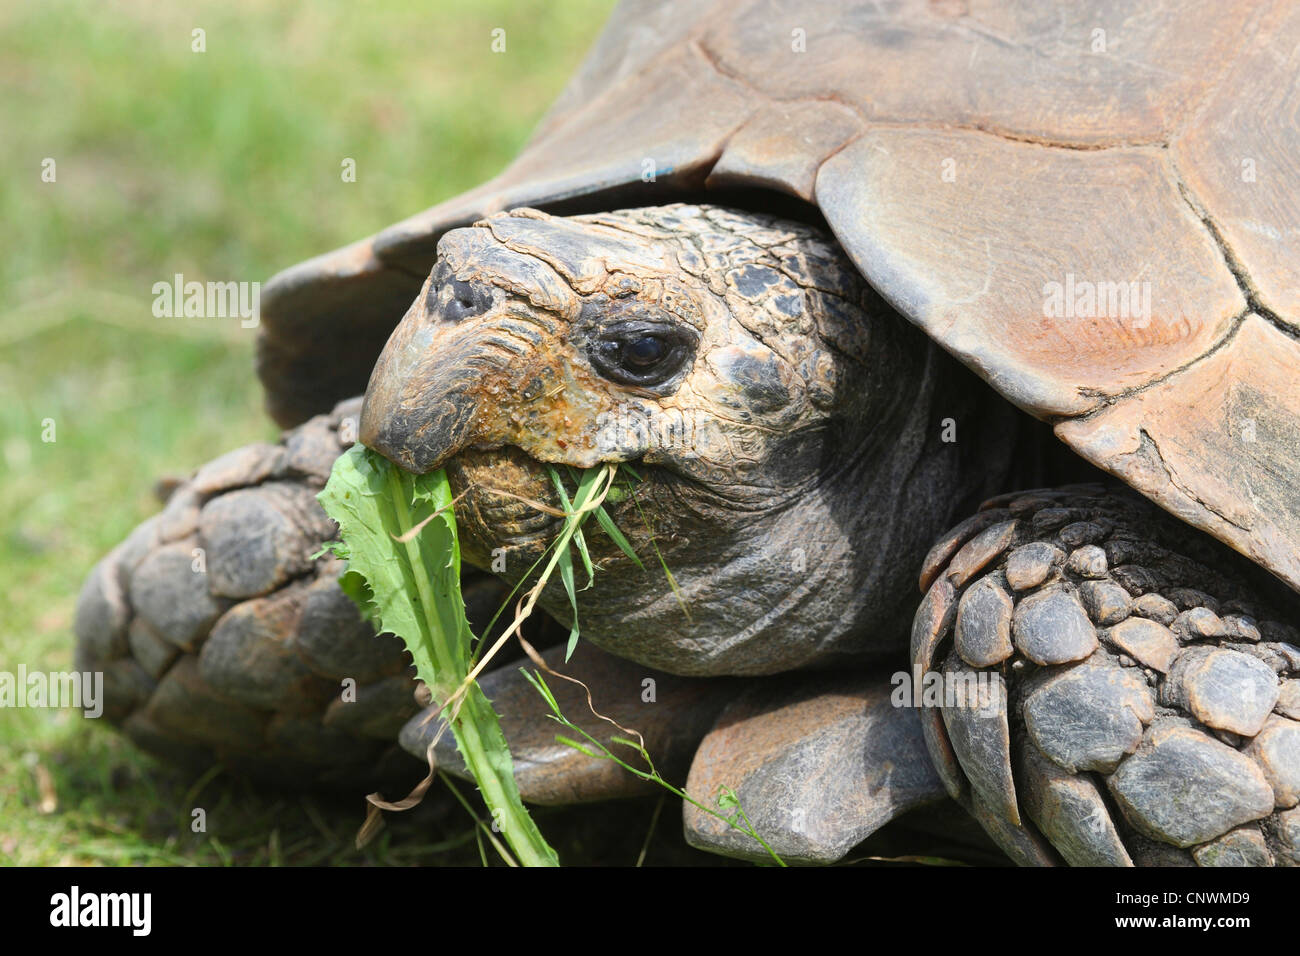 Asian giant tortoise, Asian brown tortoise, Burmese brown tortoise (Geochelone emys, Manouria emys), portrait with food in the beak Stock Photo